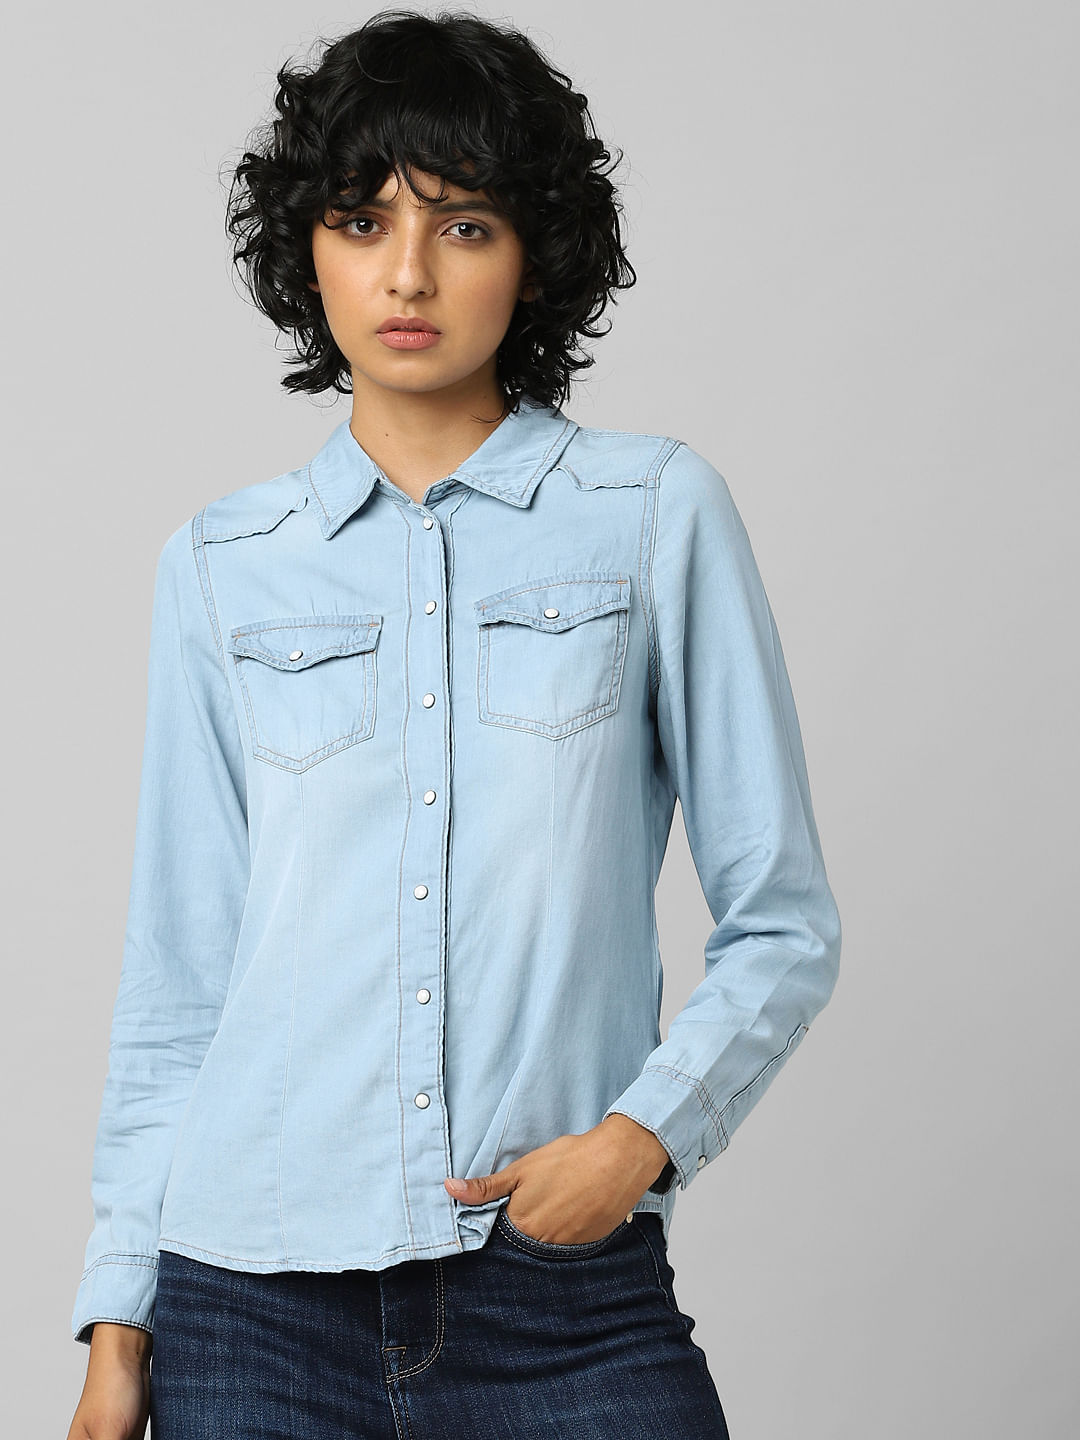 Mini-Length Denim Dress - Collared Button Front / Shirt Style / Light Blue